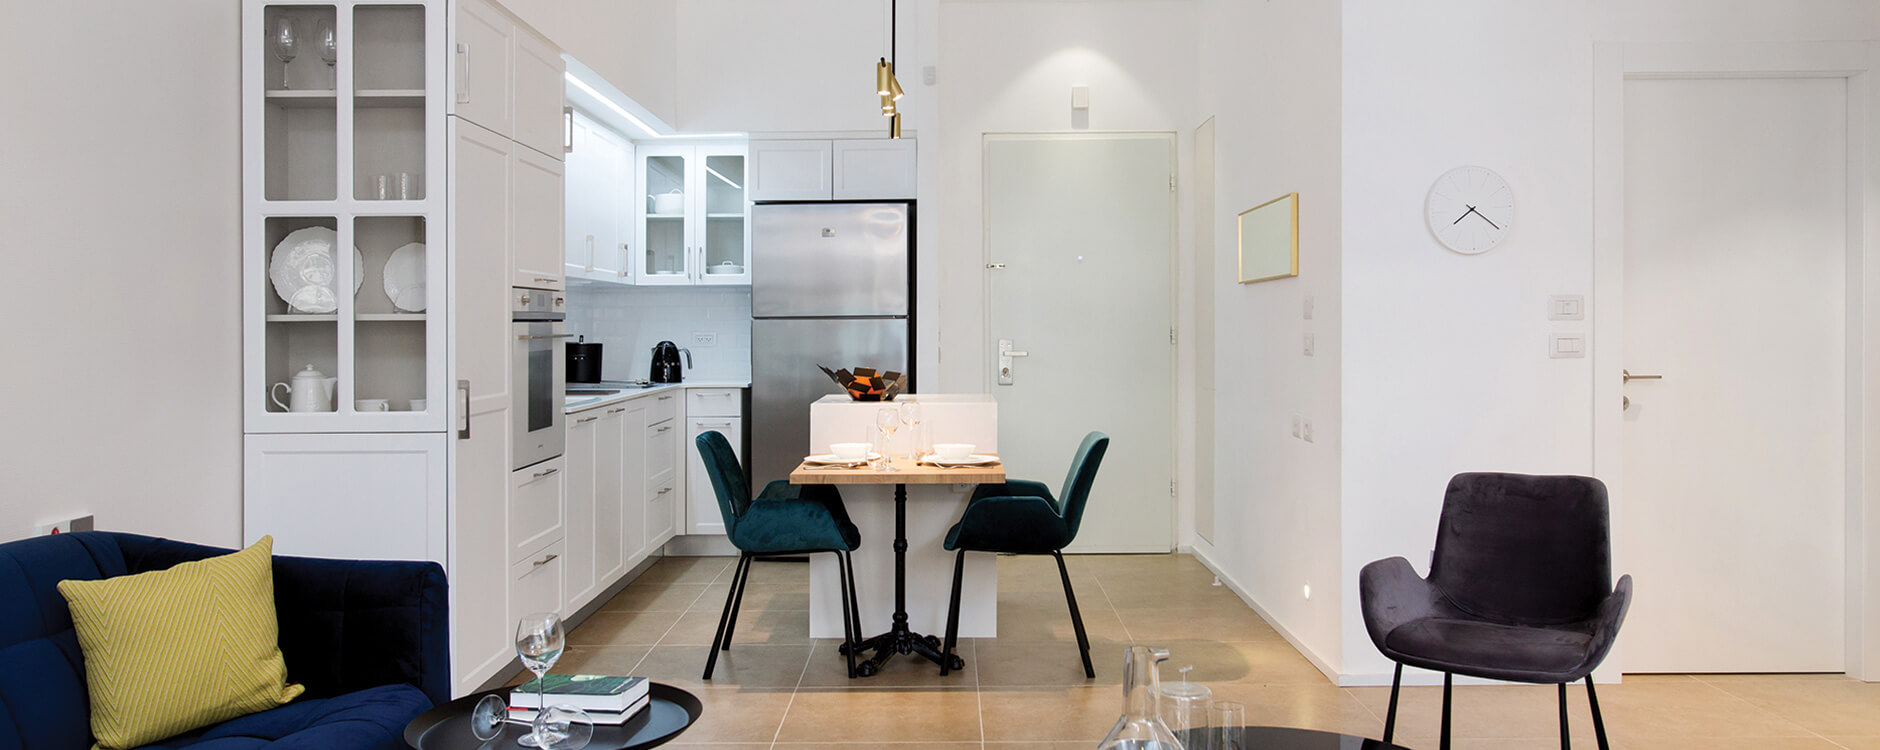 levahim- an apartment kitchen